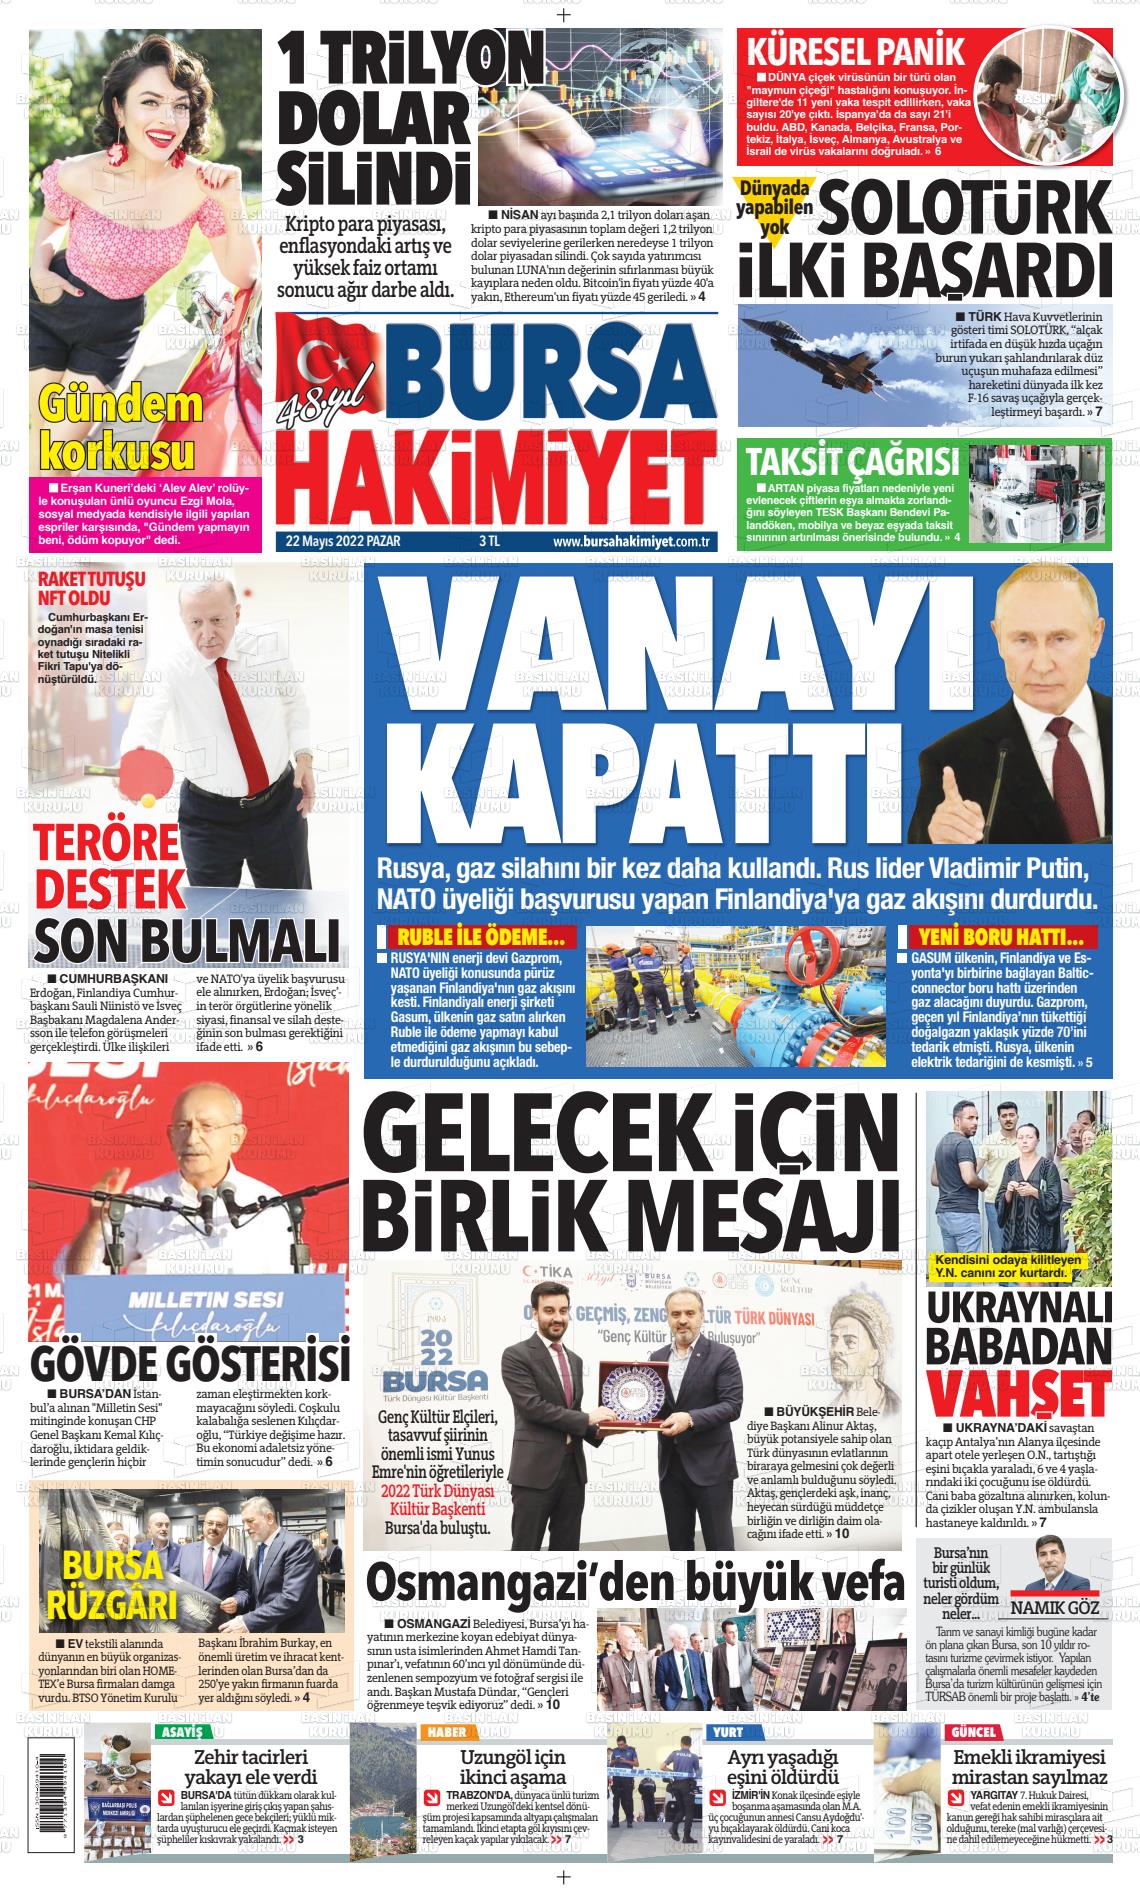 22 Mayıs 2022 Bursa Hakimiyet Gazete Manşeti